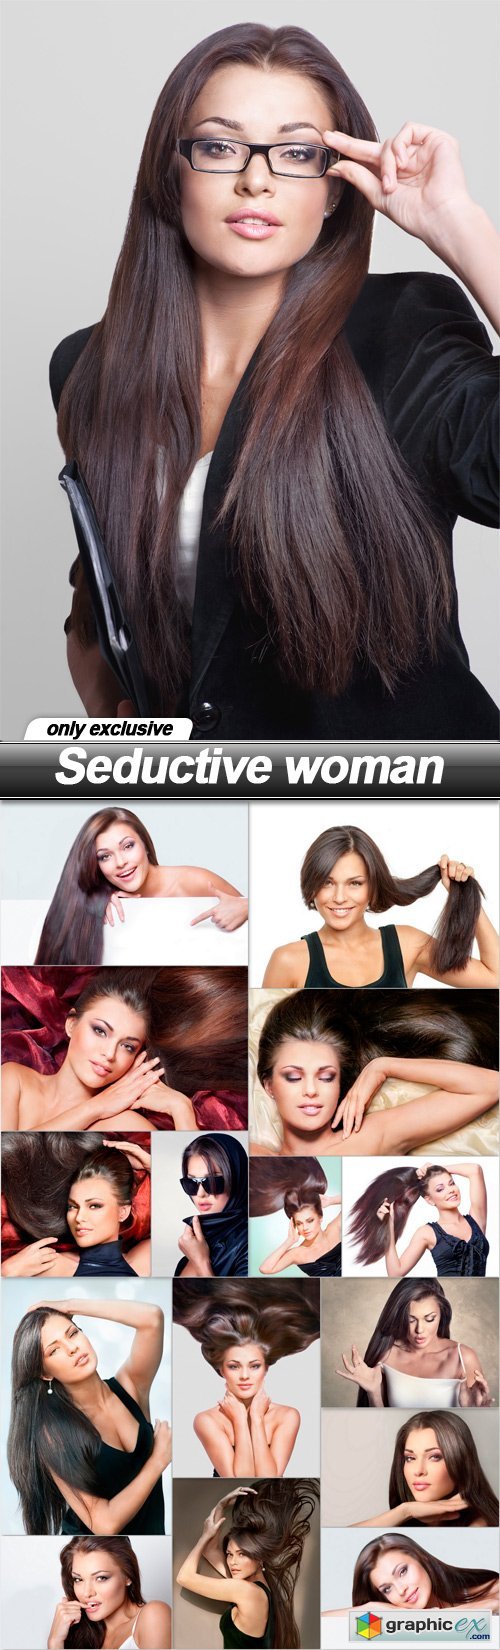 Seductive woman - 16 UHQ JPEG